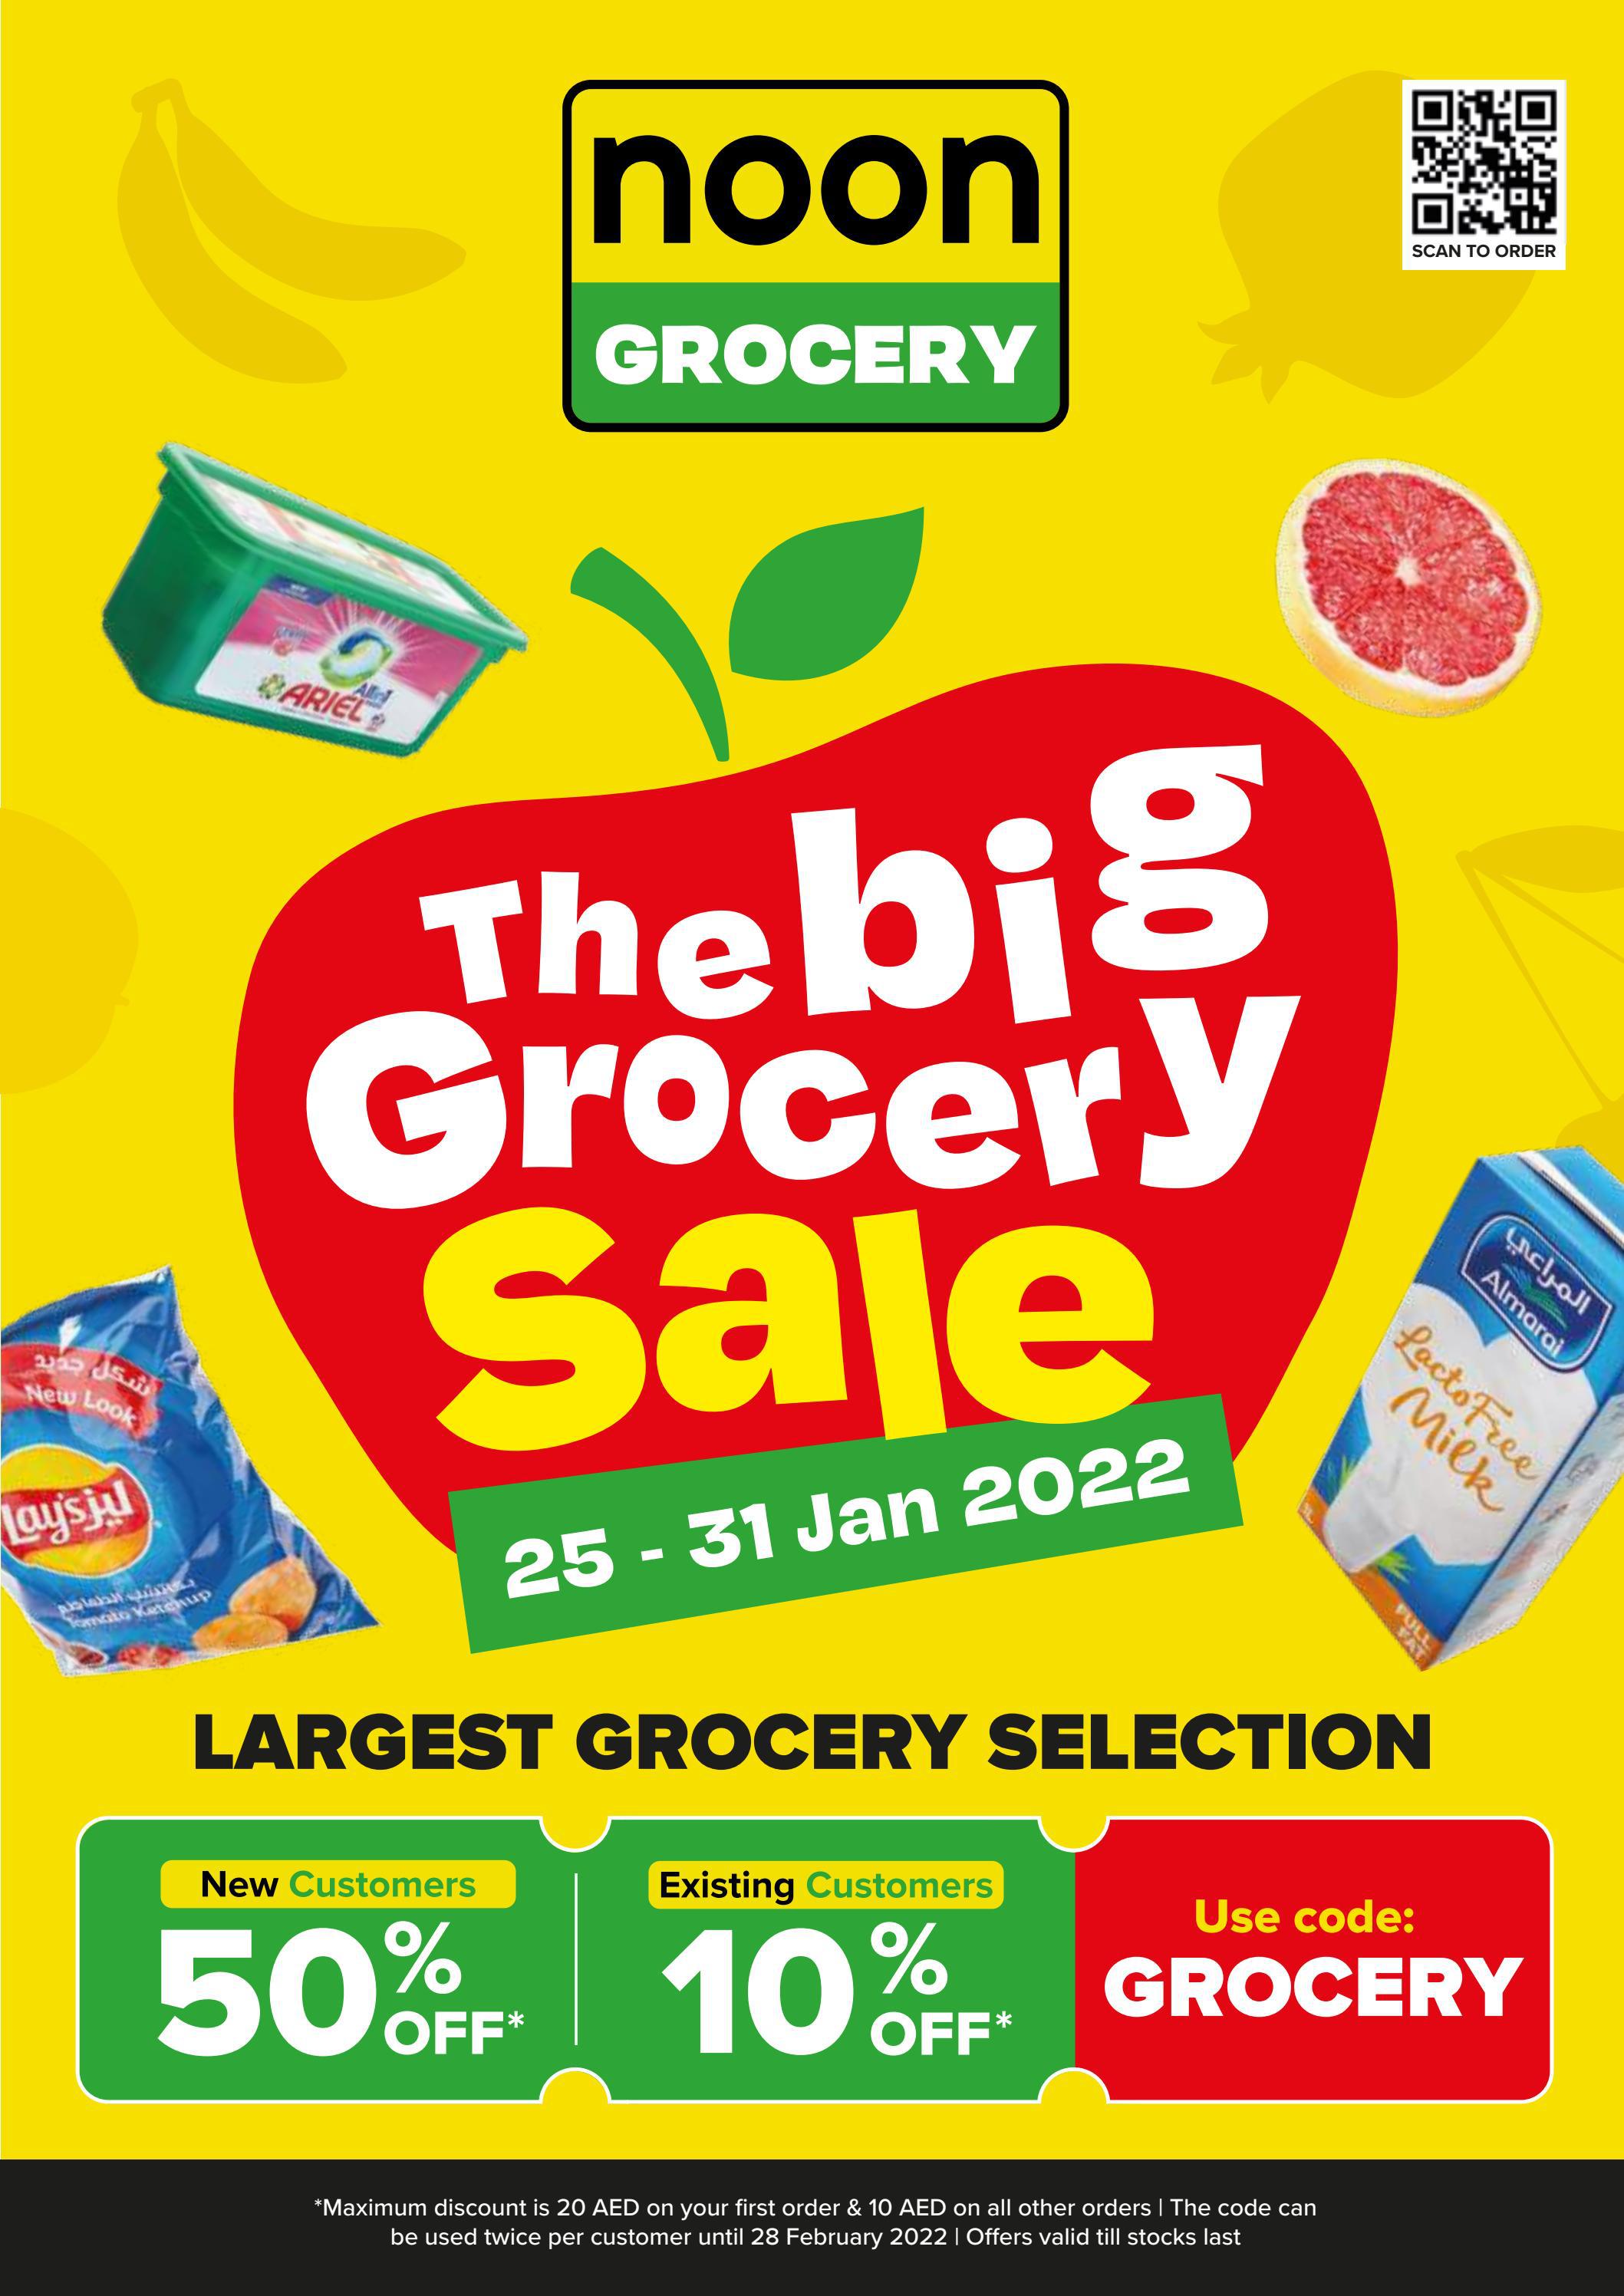 NooN Big Grocery Sale